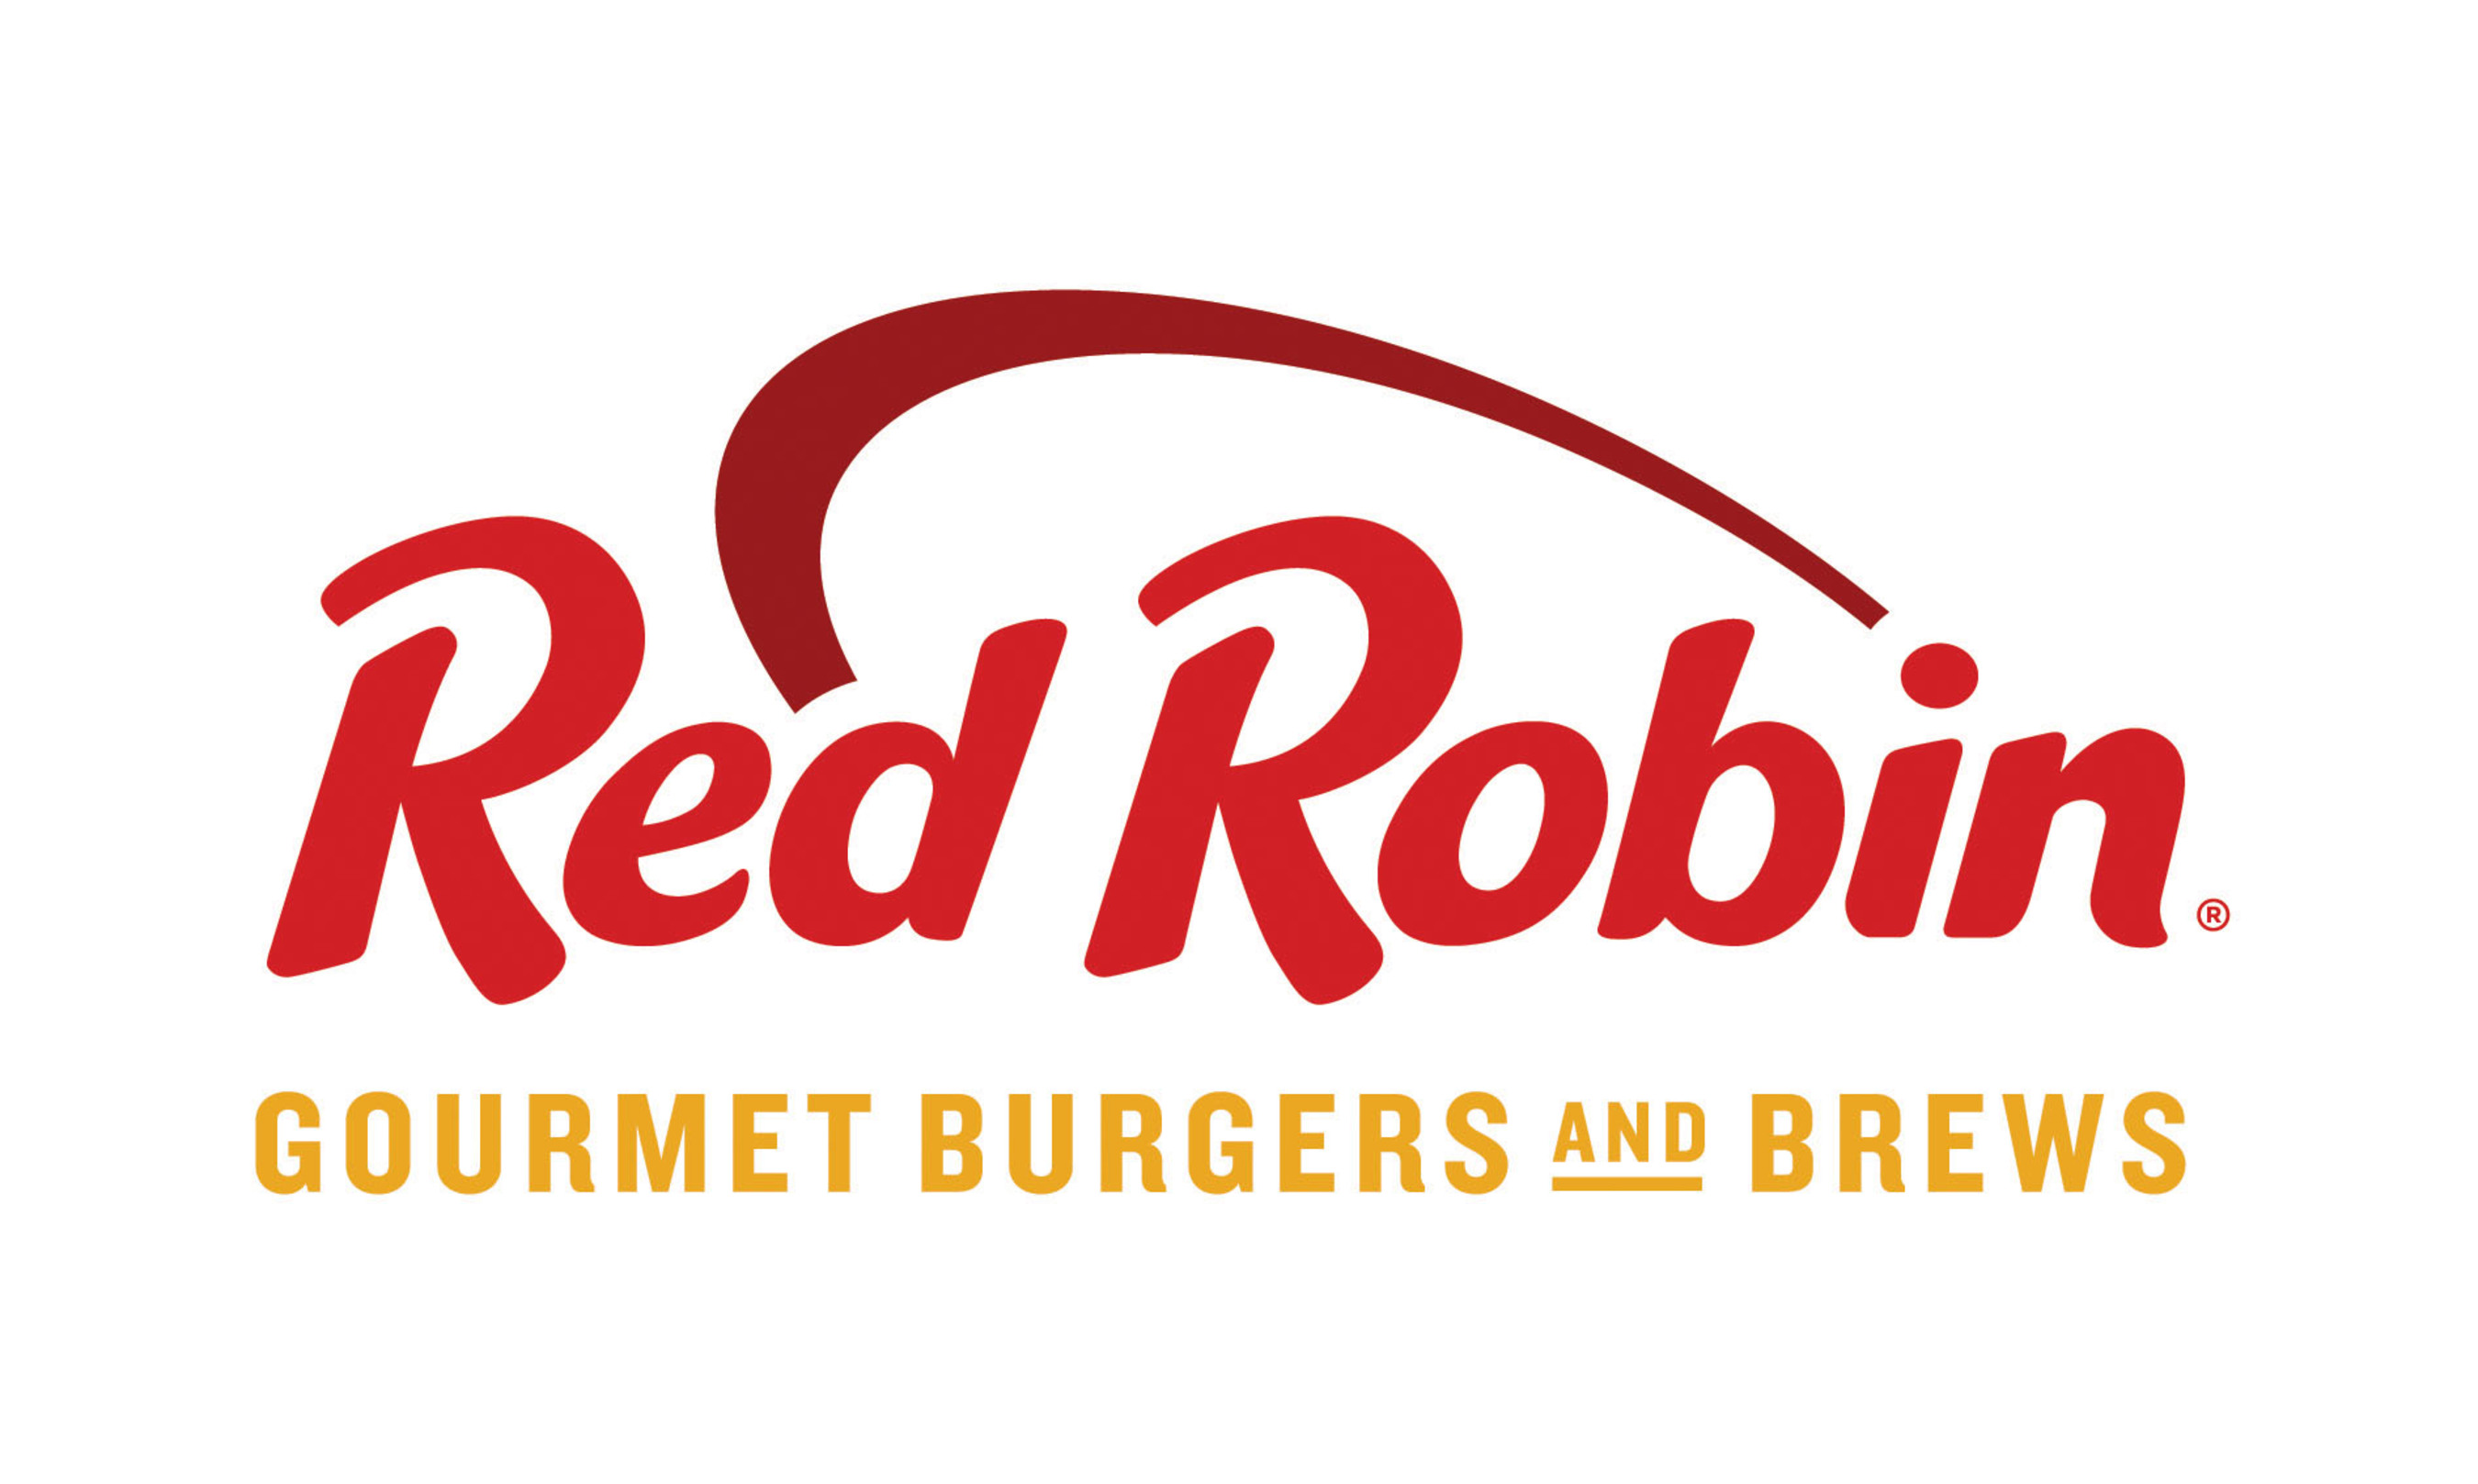 Red Robin Gourmet Burgers and Brews (PRNewsFoto/Red Robin Gourmet Burgers, Inc.)